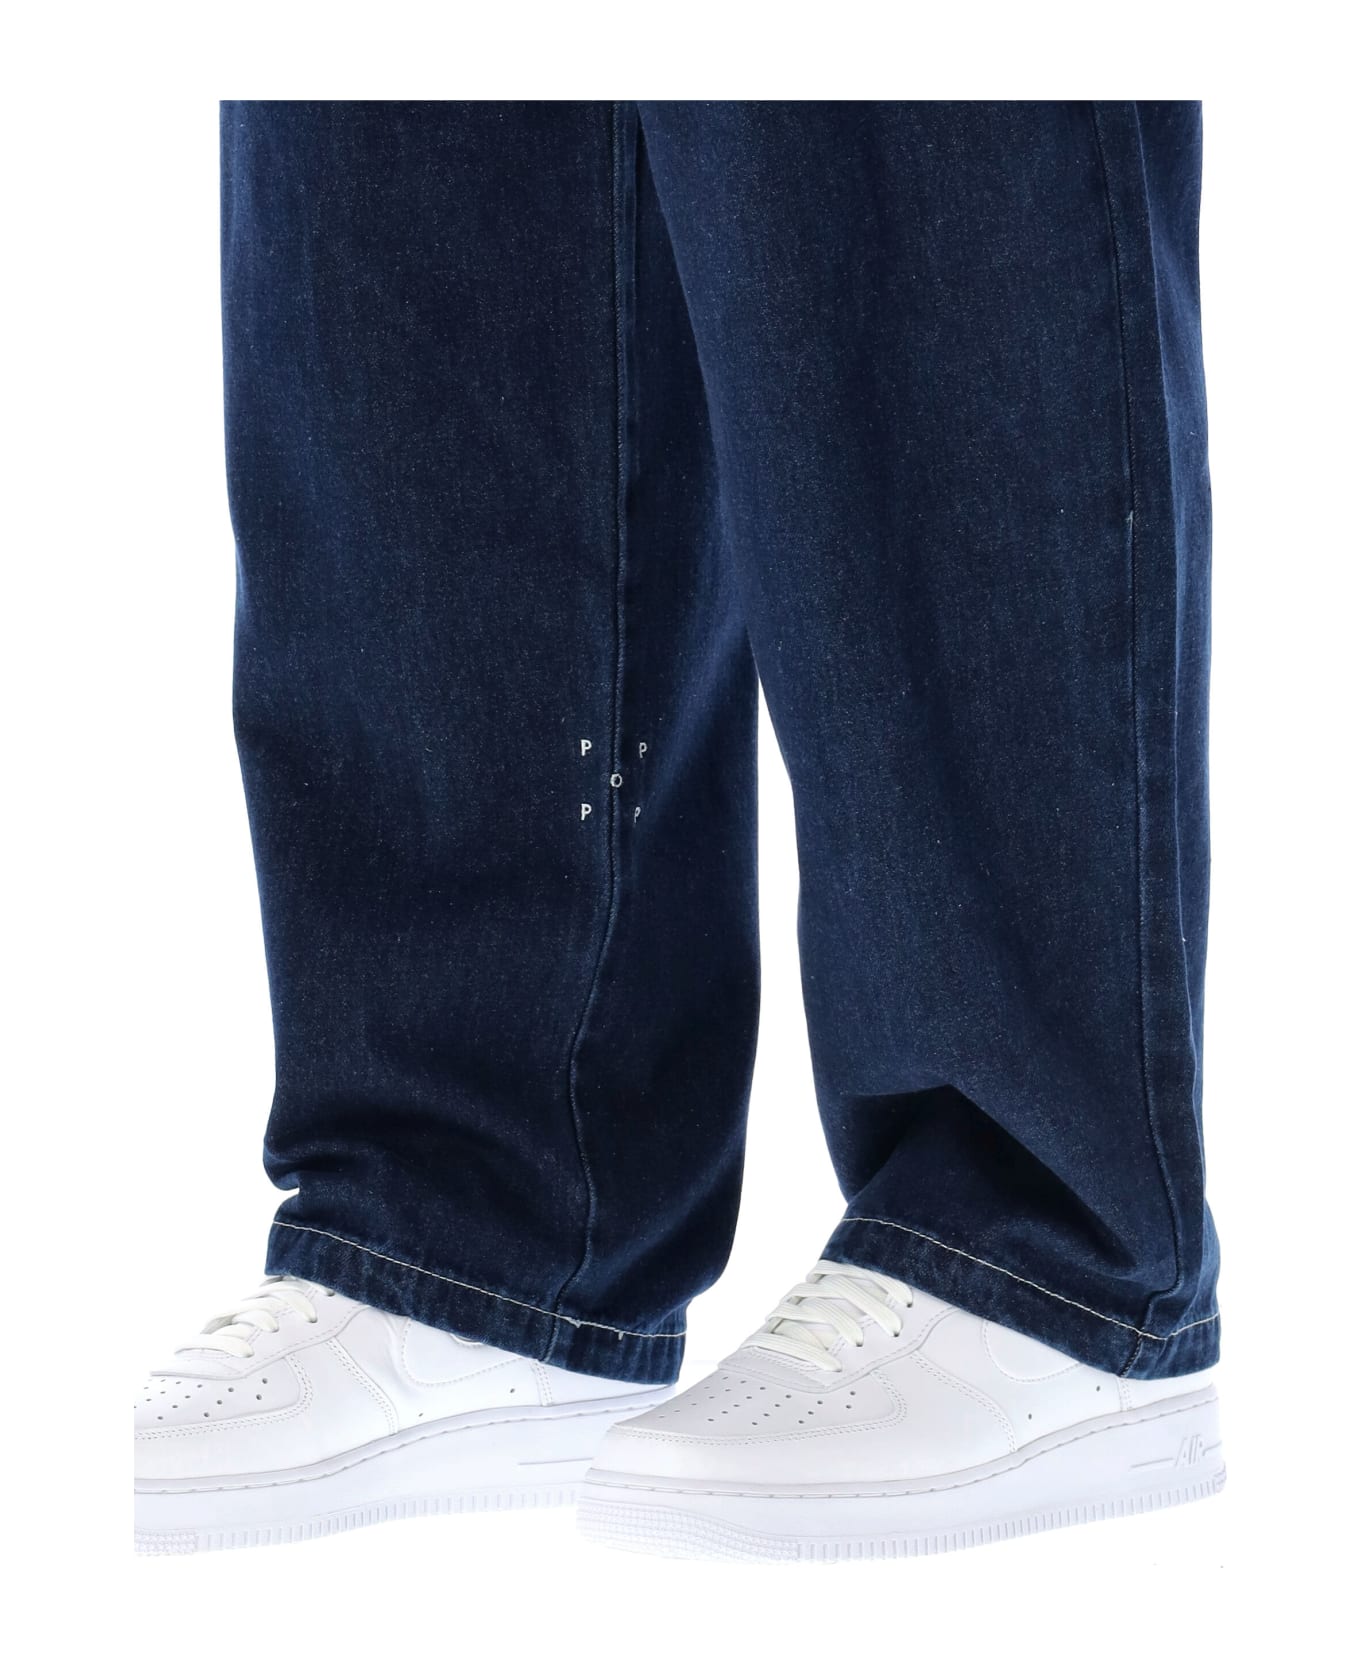 Pop Trading Company Pop Hewitt Suit Pants - DARK BLUE